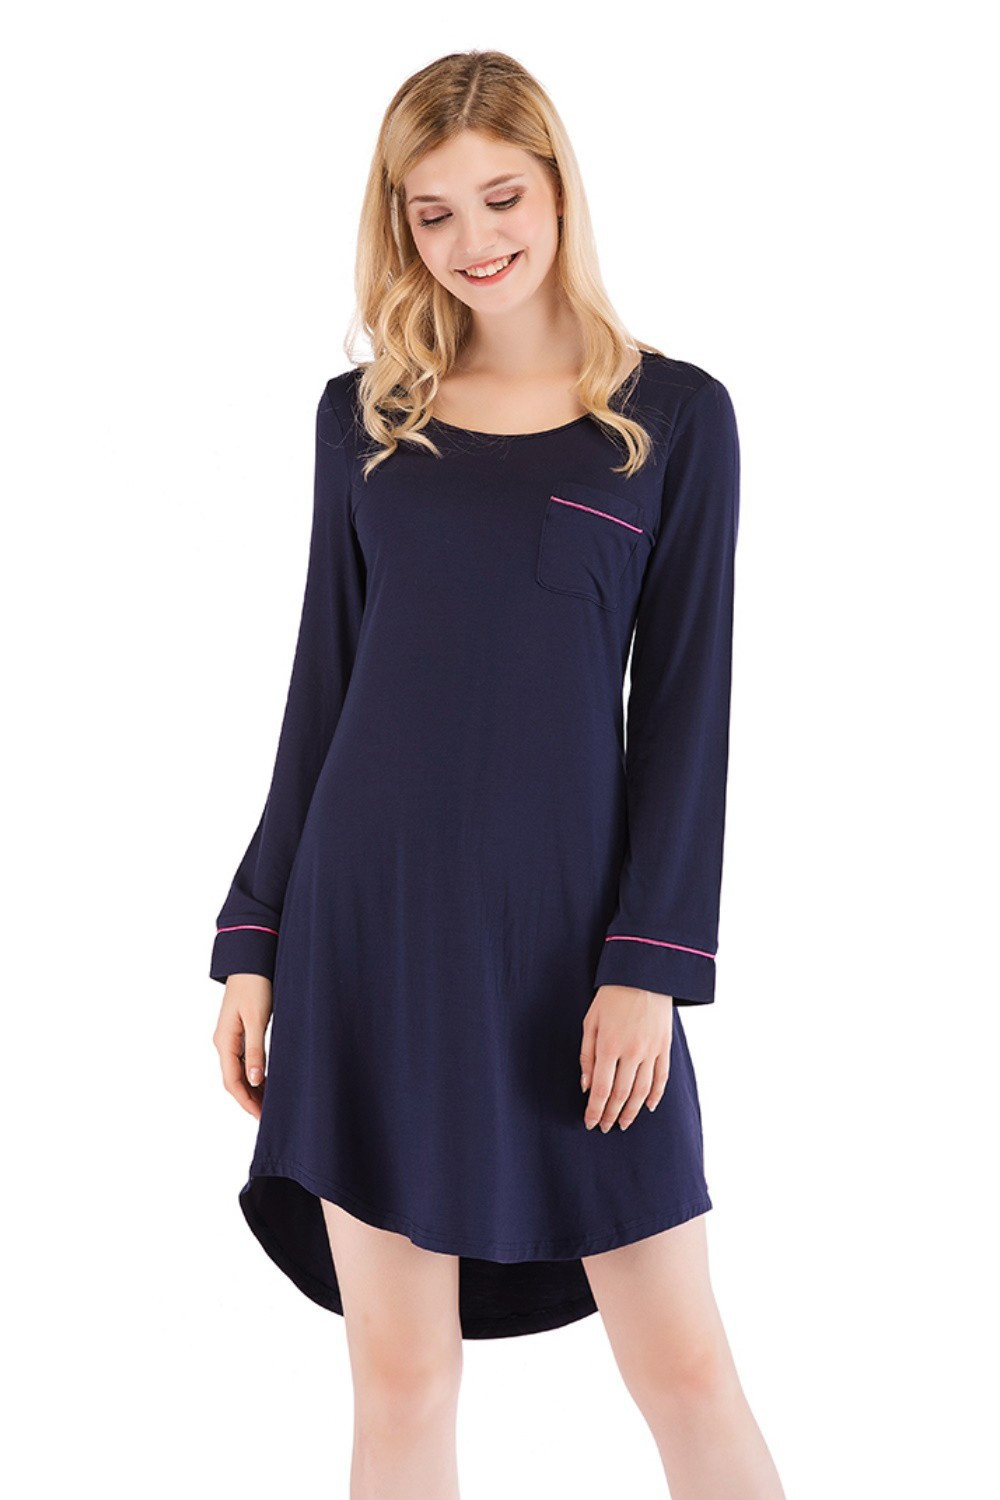 Navy nightgown